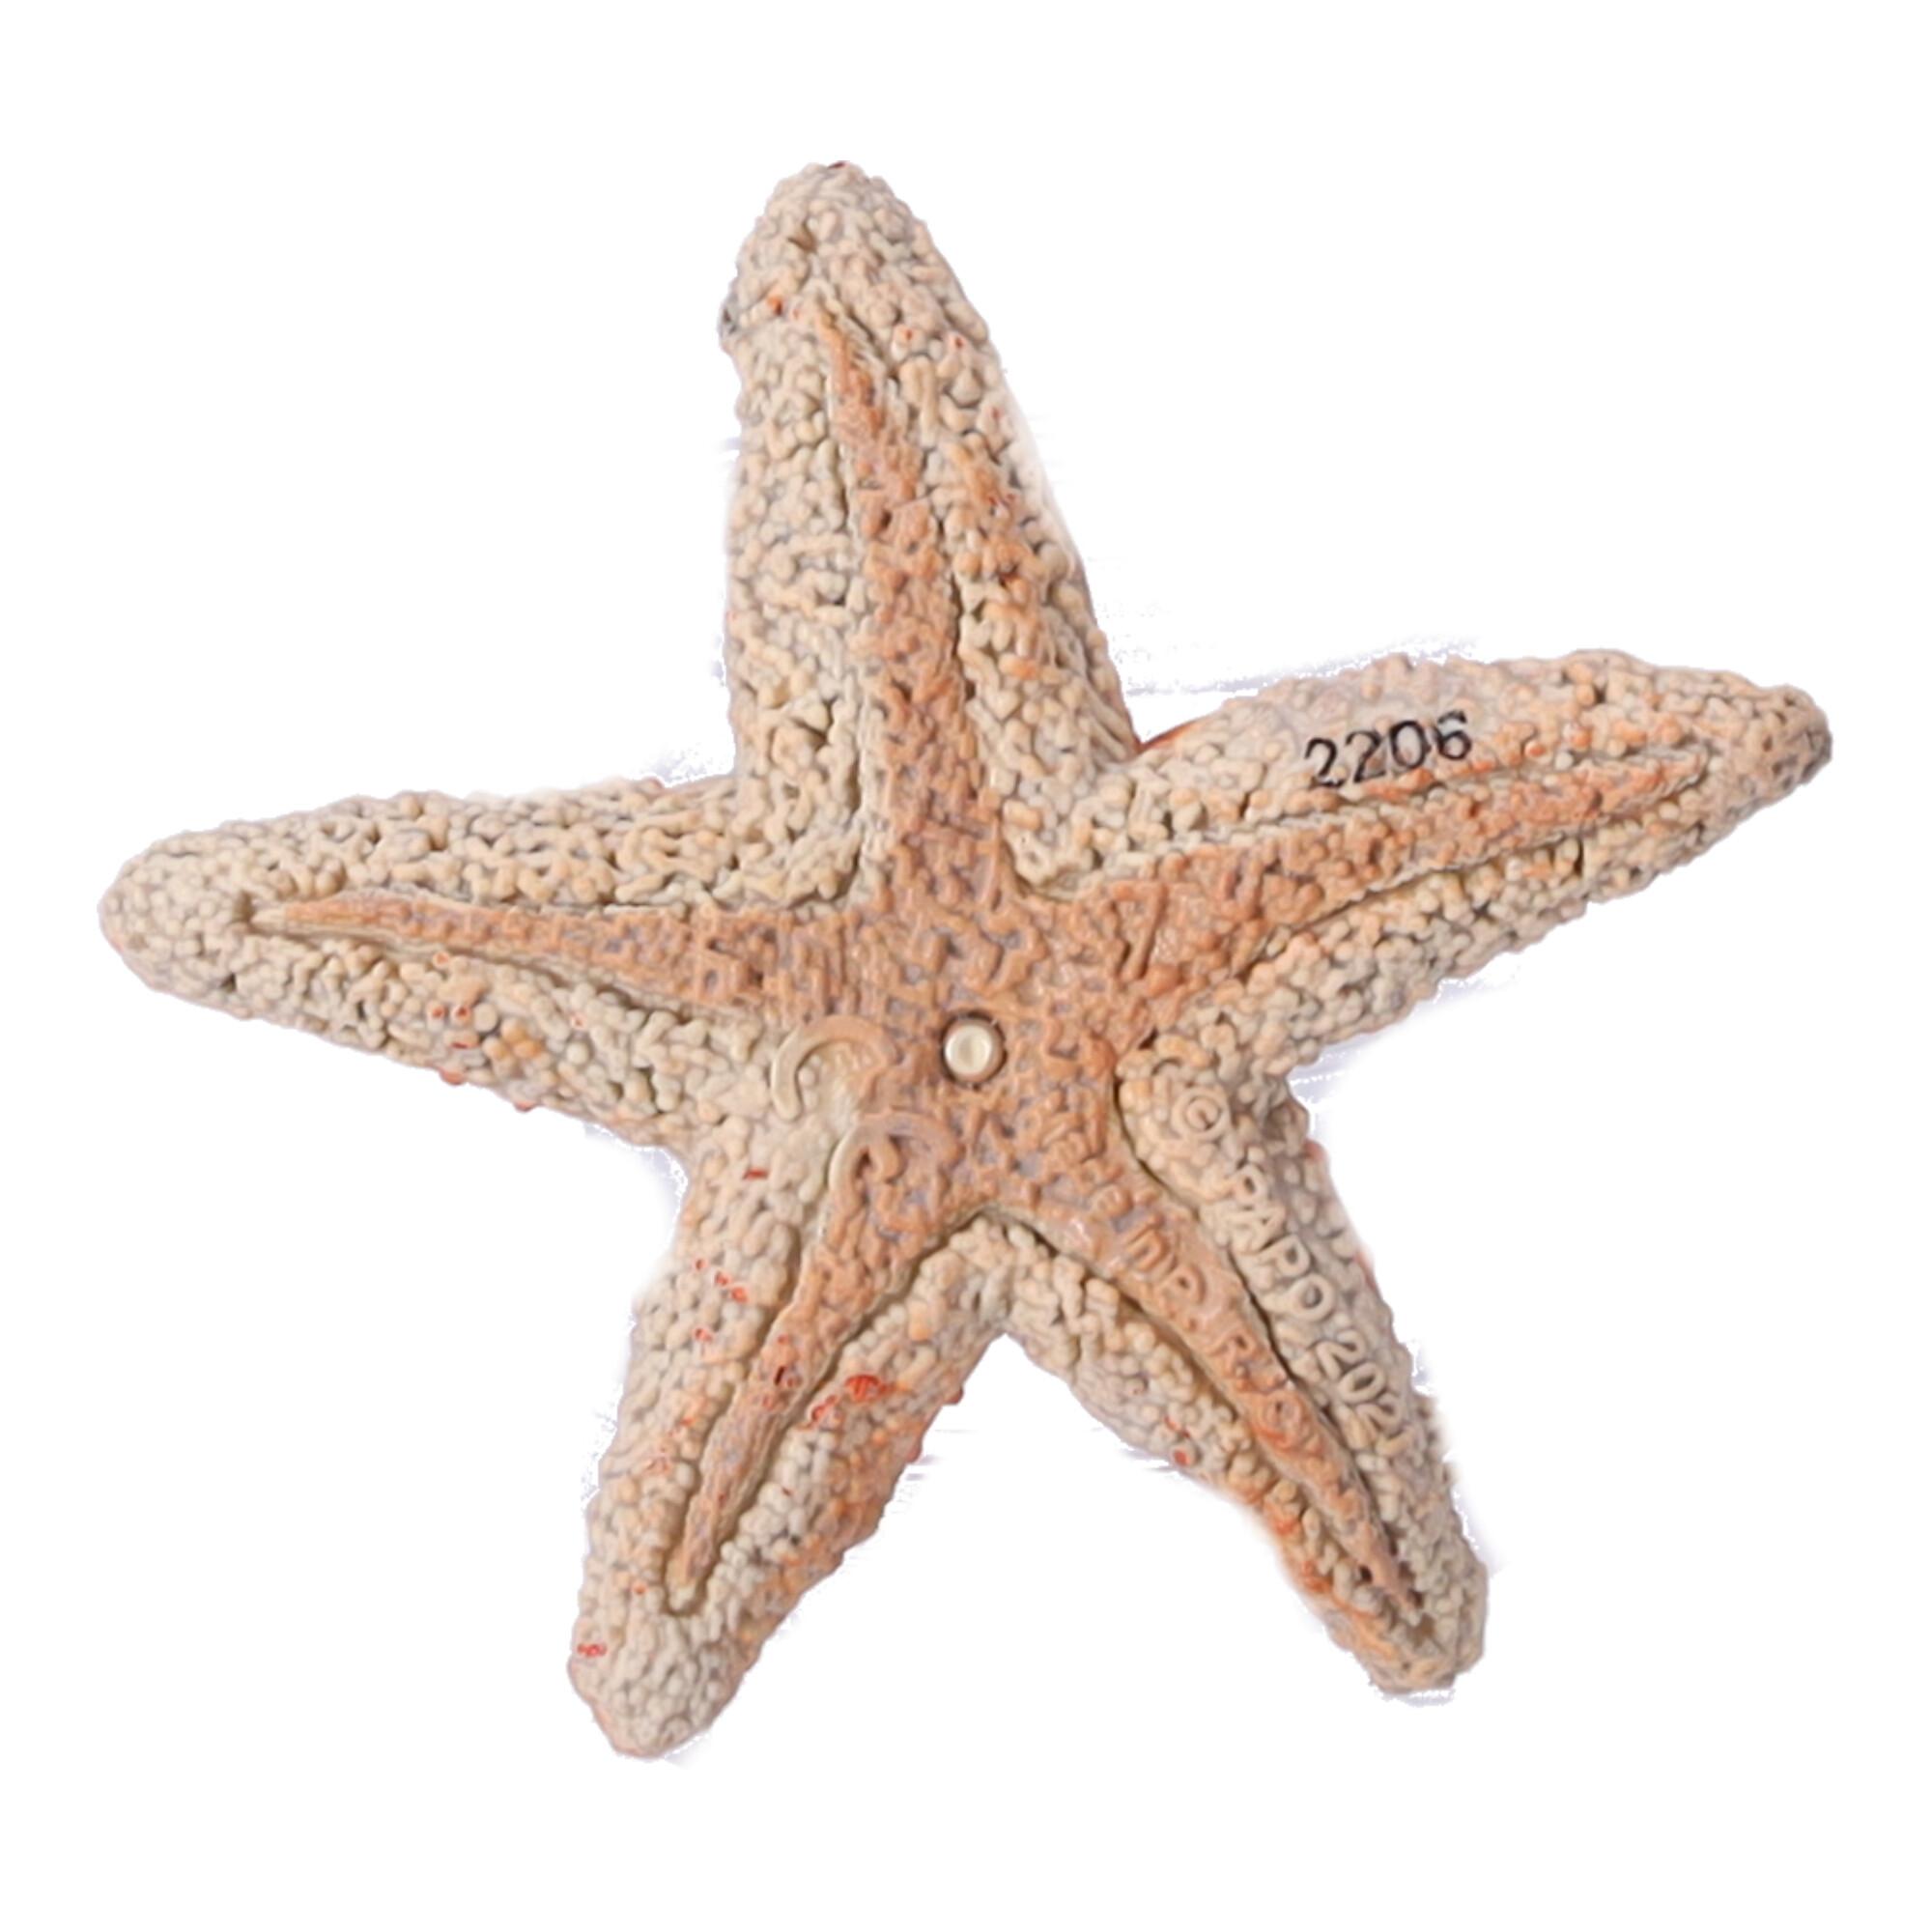 Collectible figurine Starfish, Papo